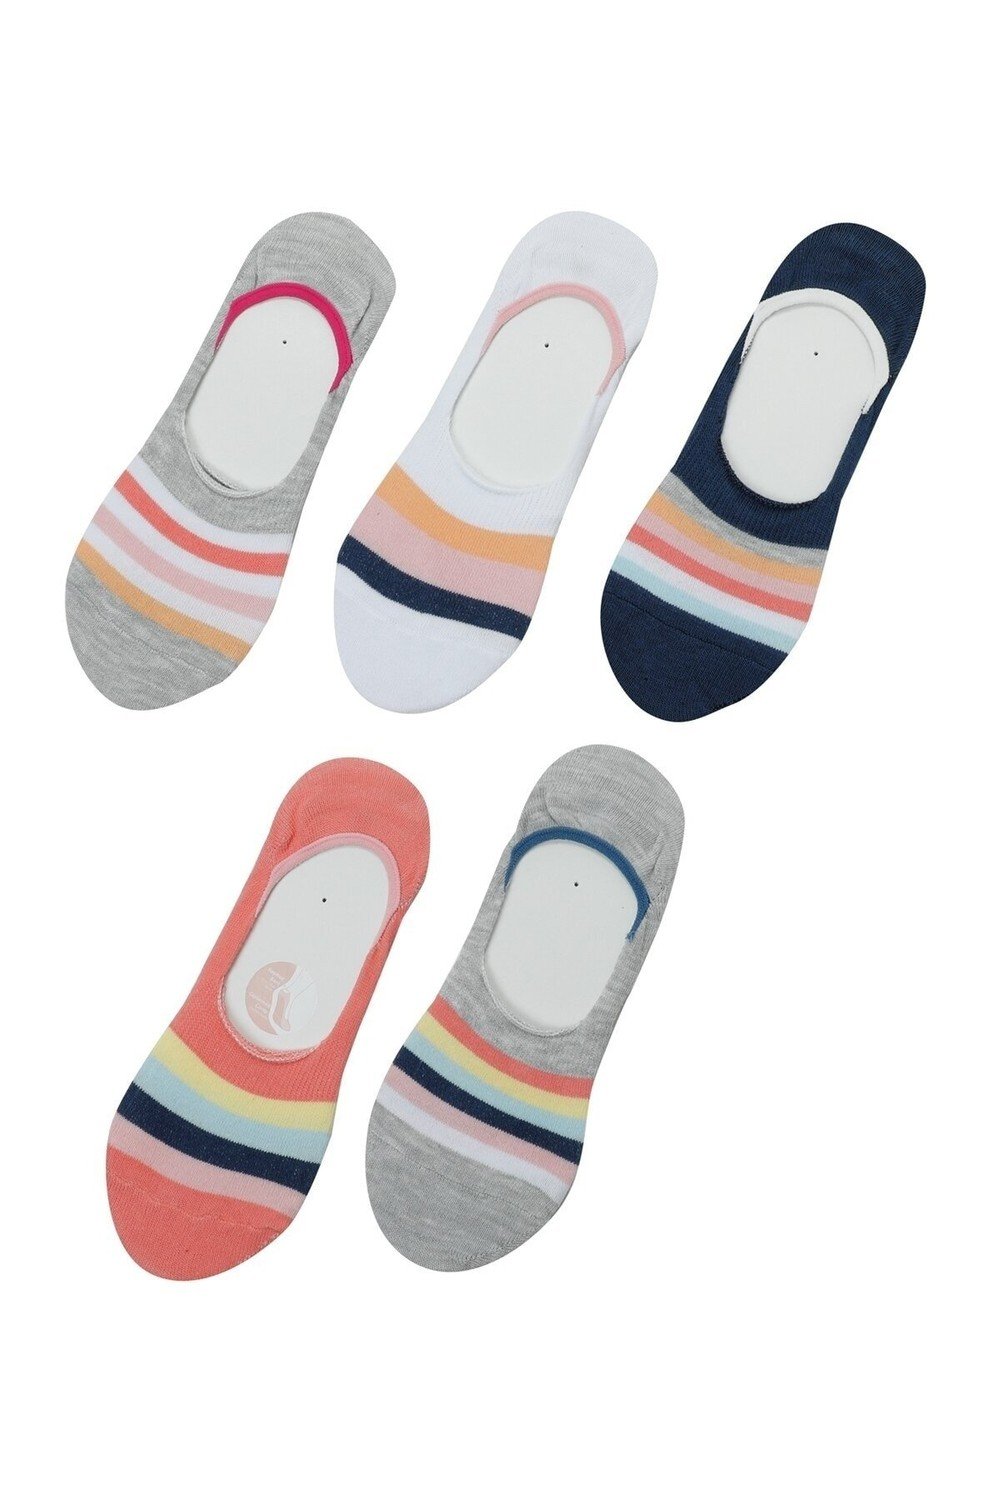 Polaris Socks - Multicolor - 5 pcs